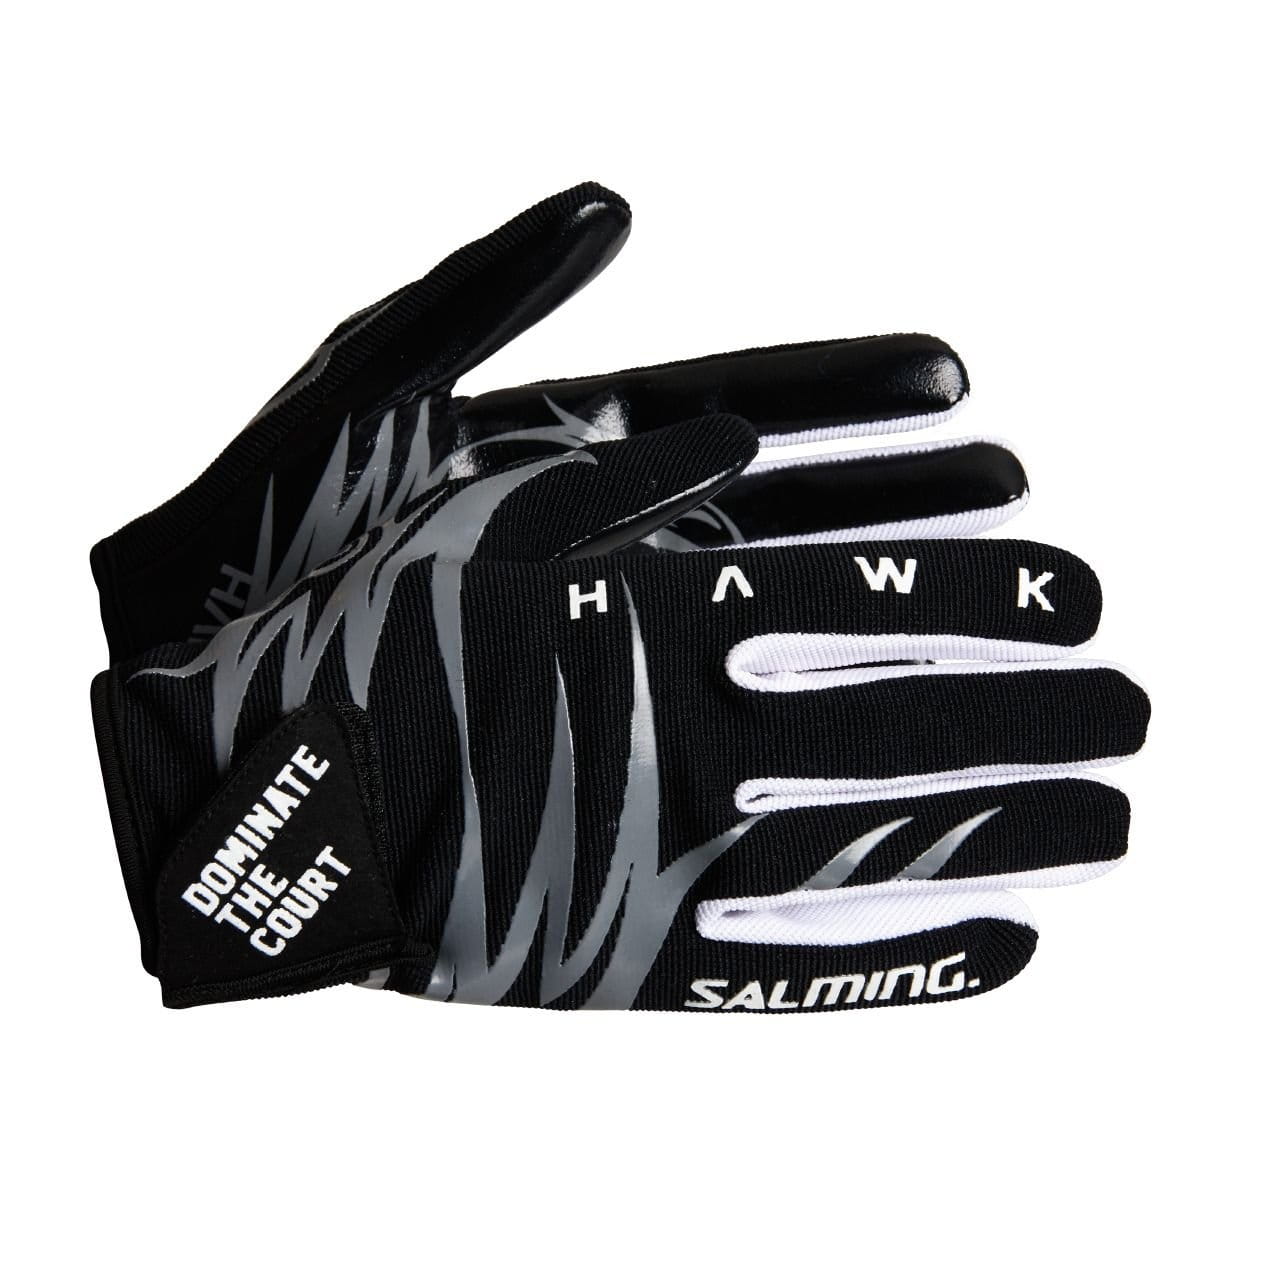 Torwart-Unihockey-Handschuhe Salming Hawk Goalie Gloves